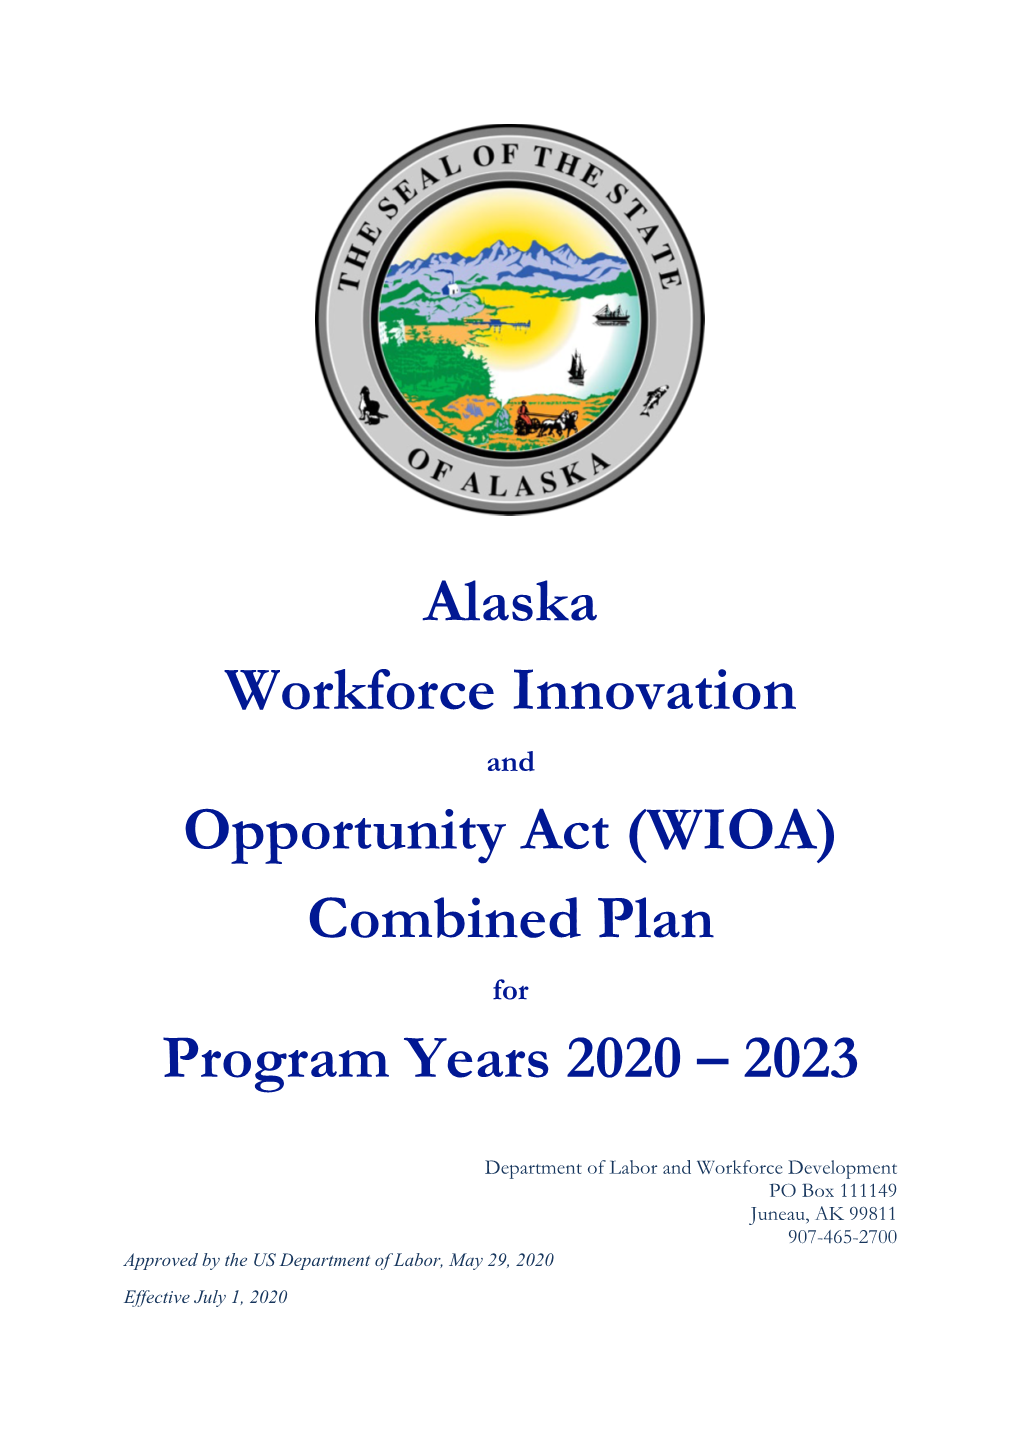 (WIOA) Combined Plan Program Years 2020 – 2023